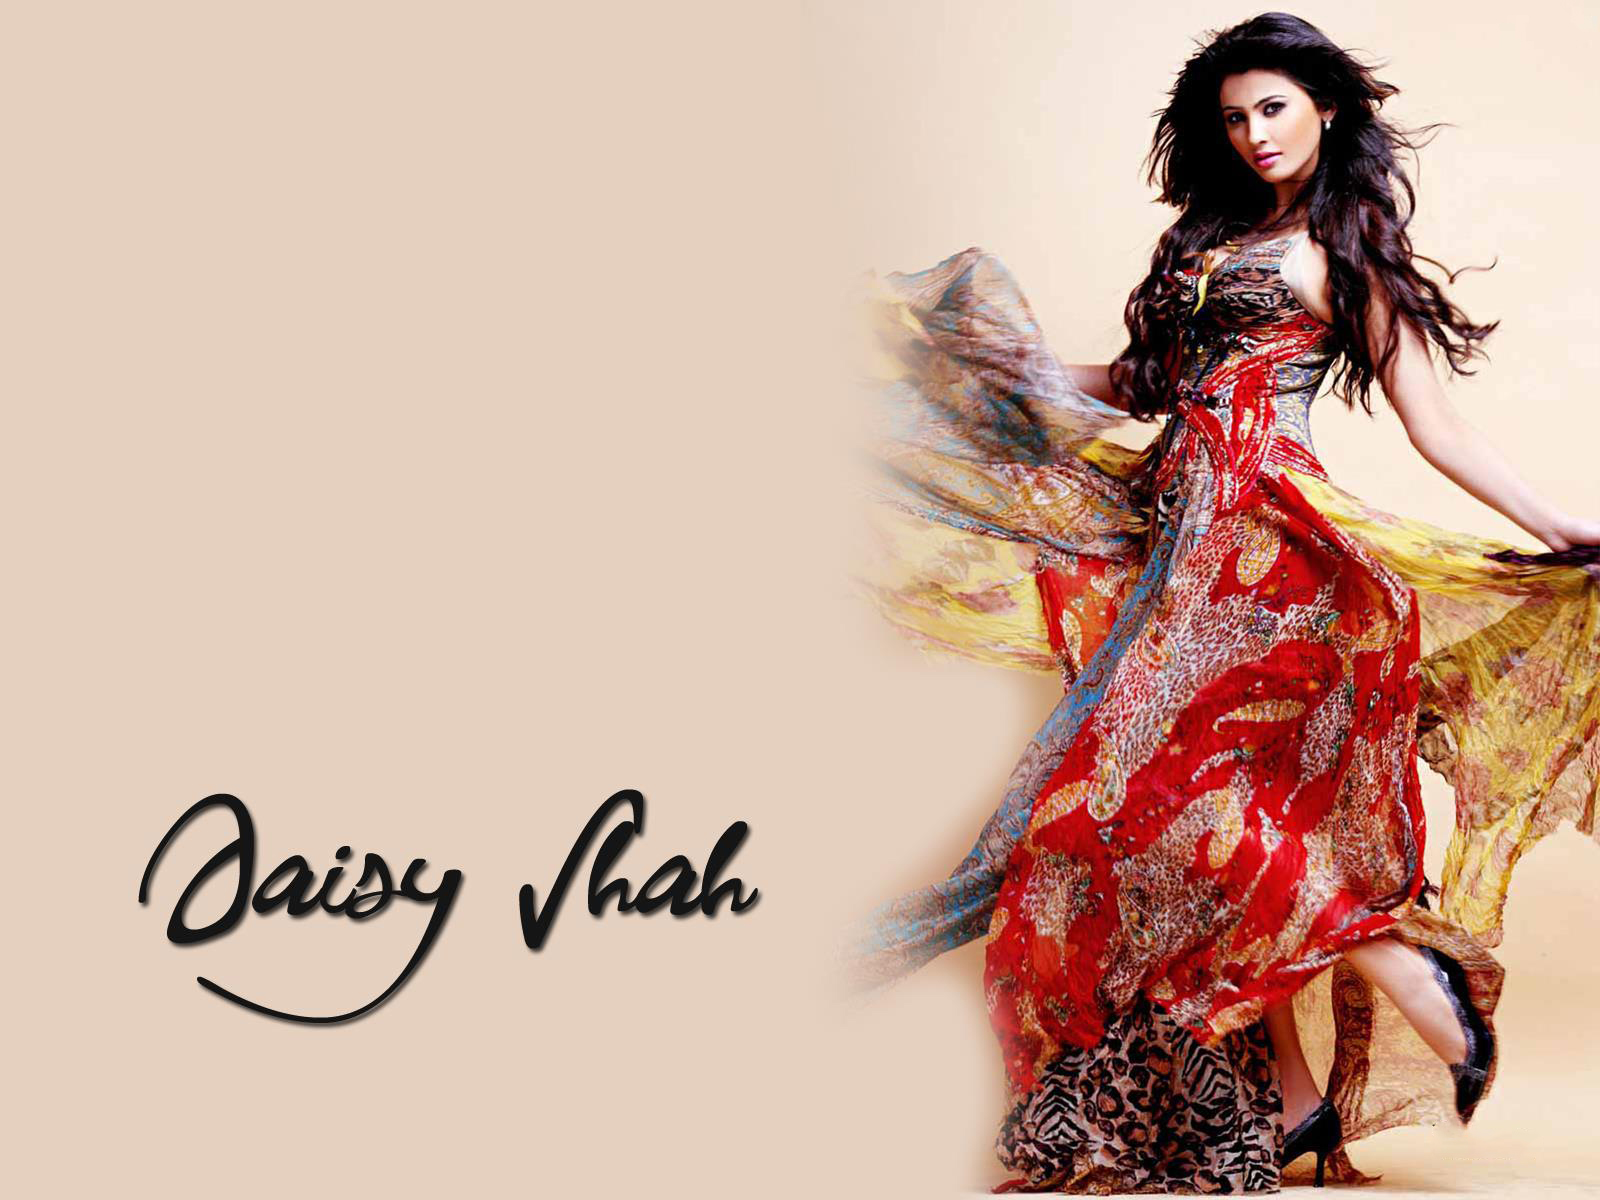 Daisy Shah Wallpapers